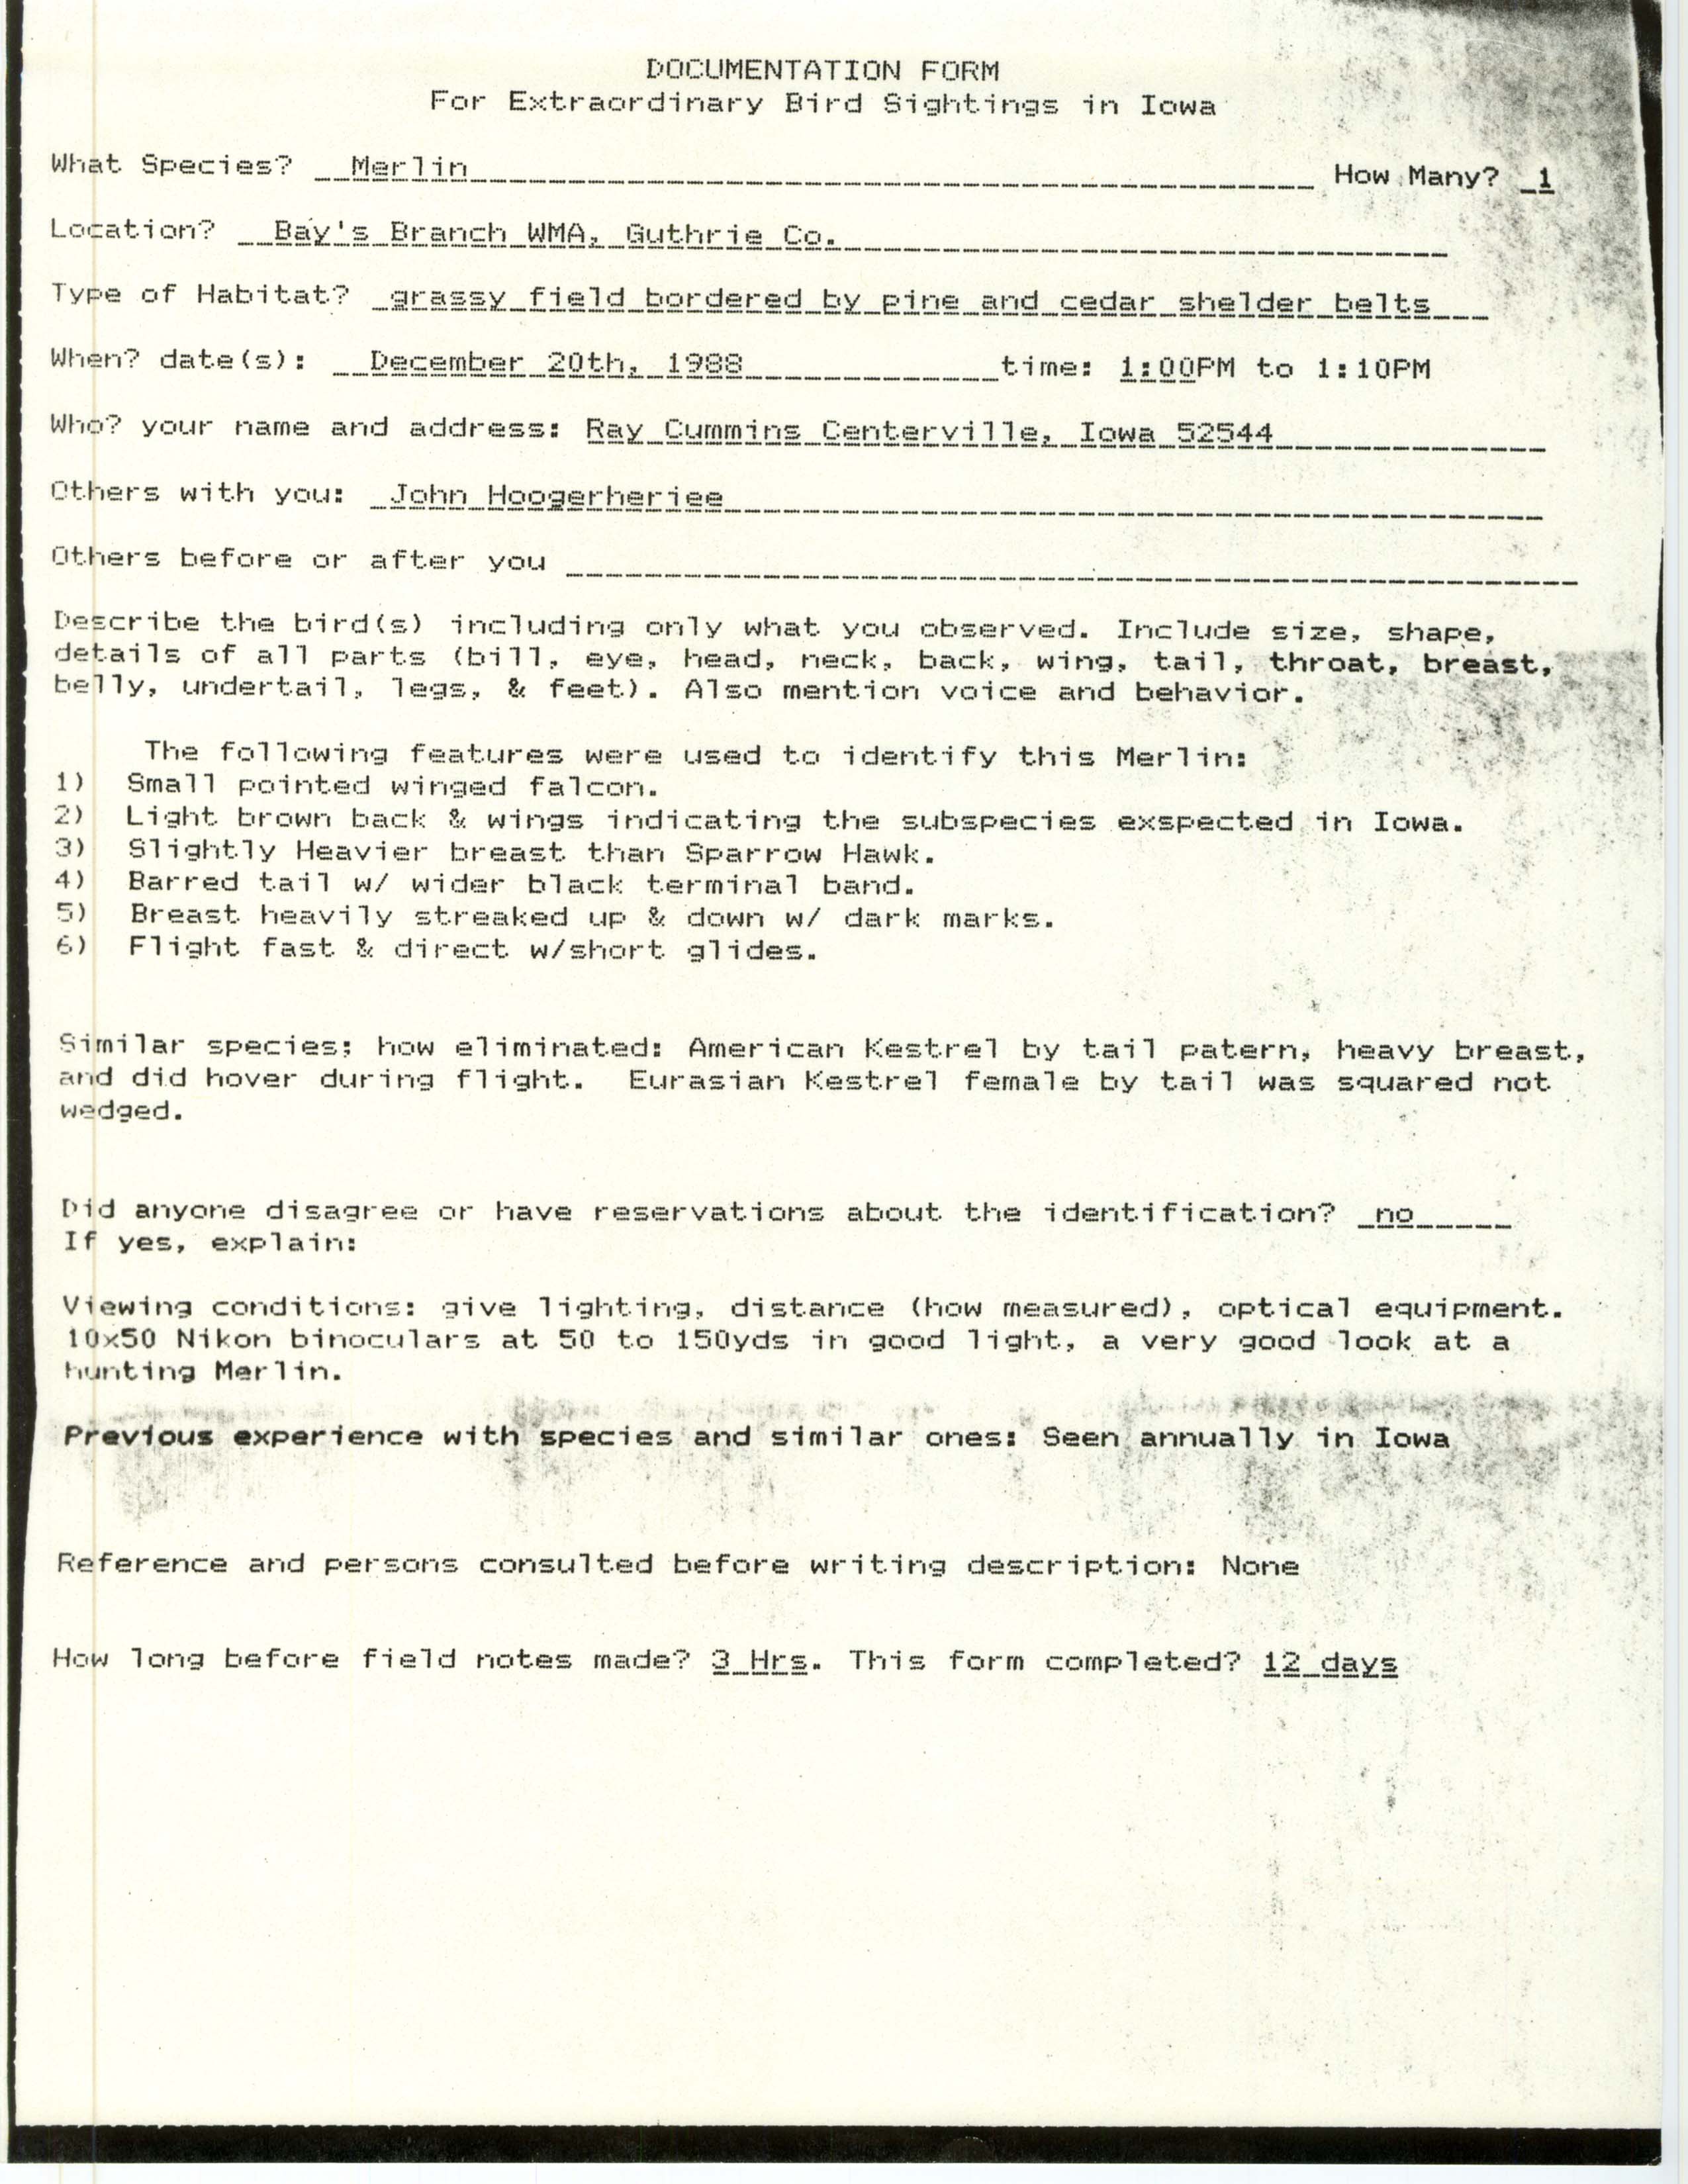 Rare bird documentation form for Merlin at Bay's Branch Wildlife Management Area, 1988